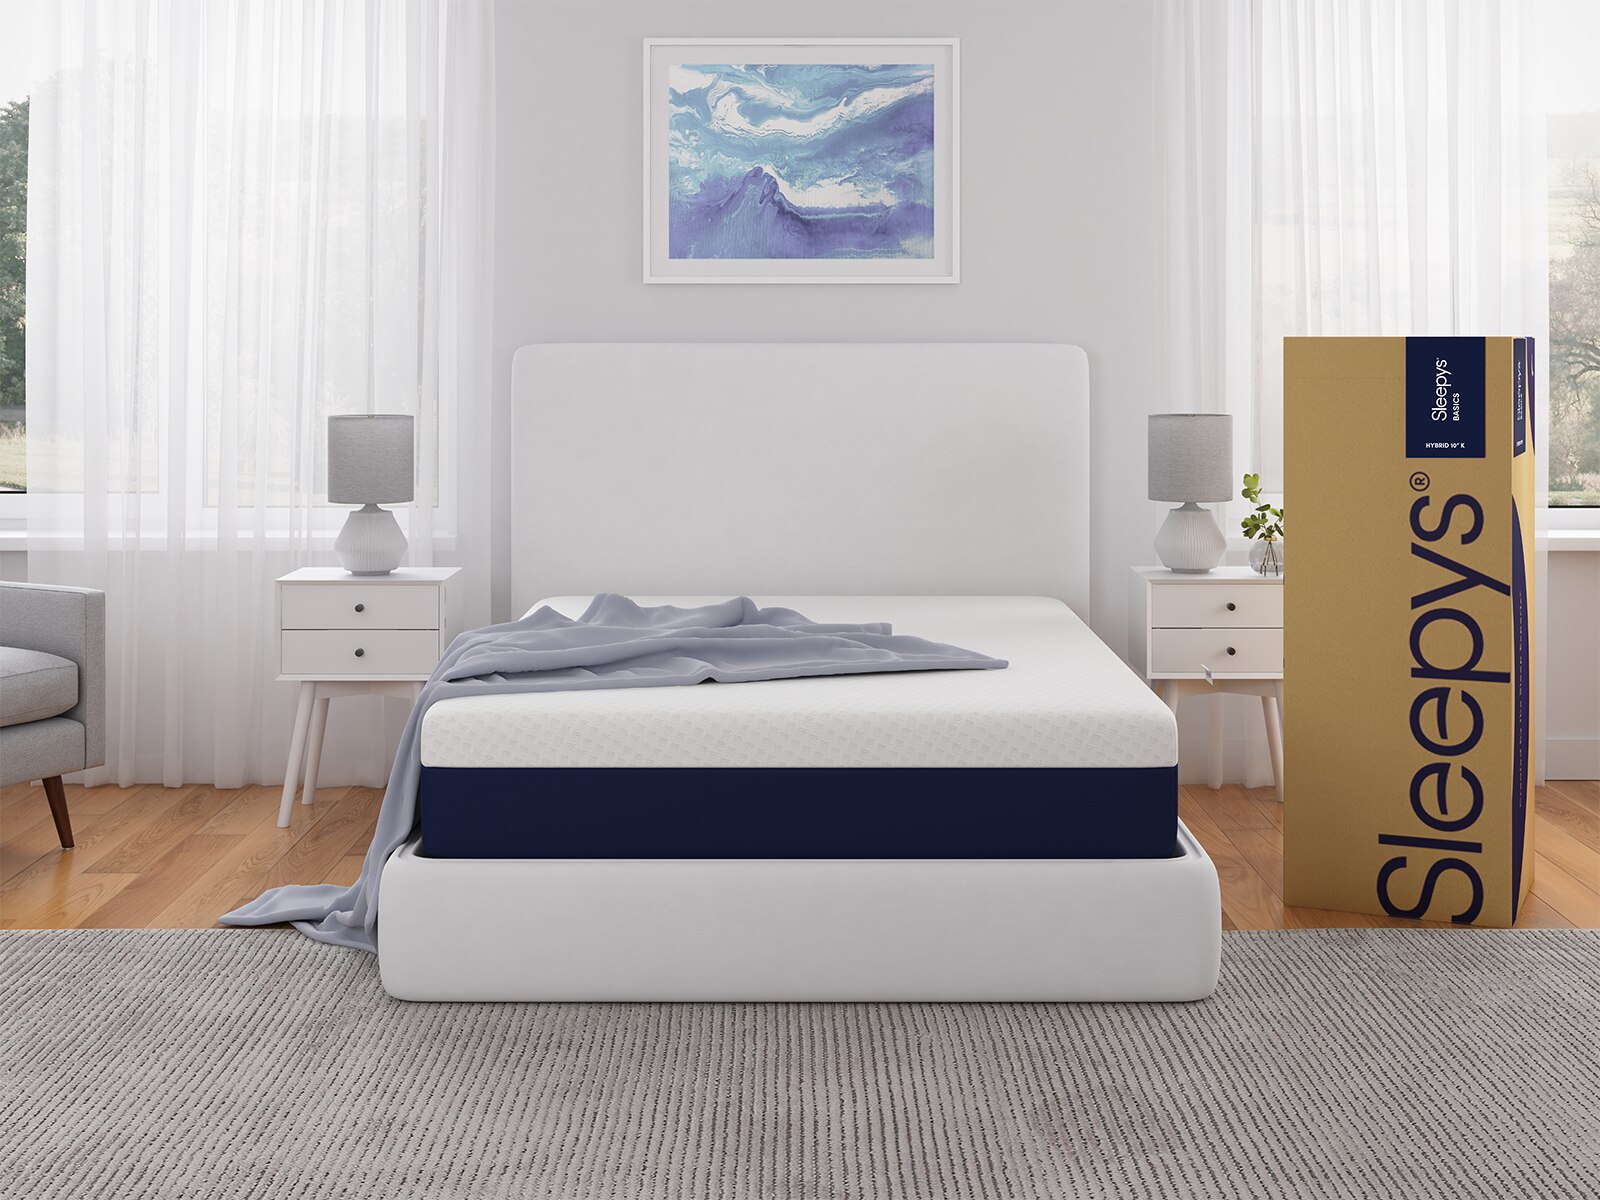 sleepy's mattress hybrid medium firm